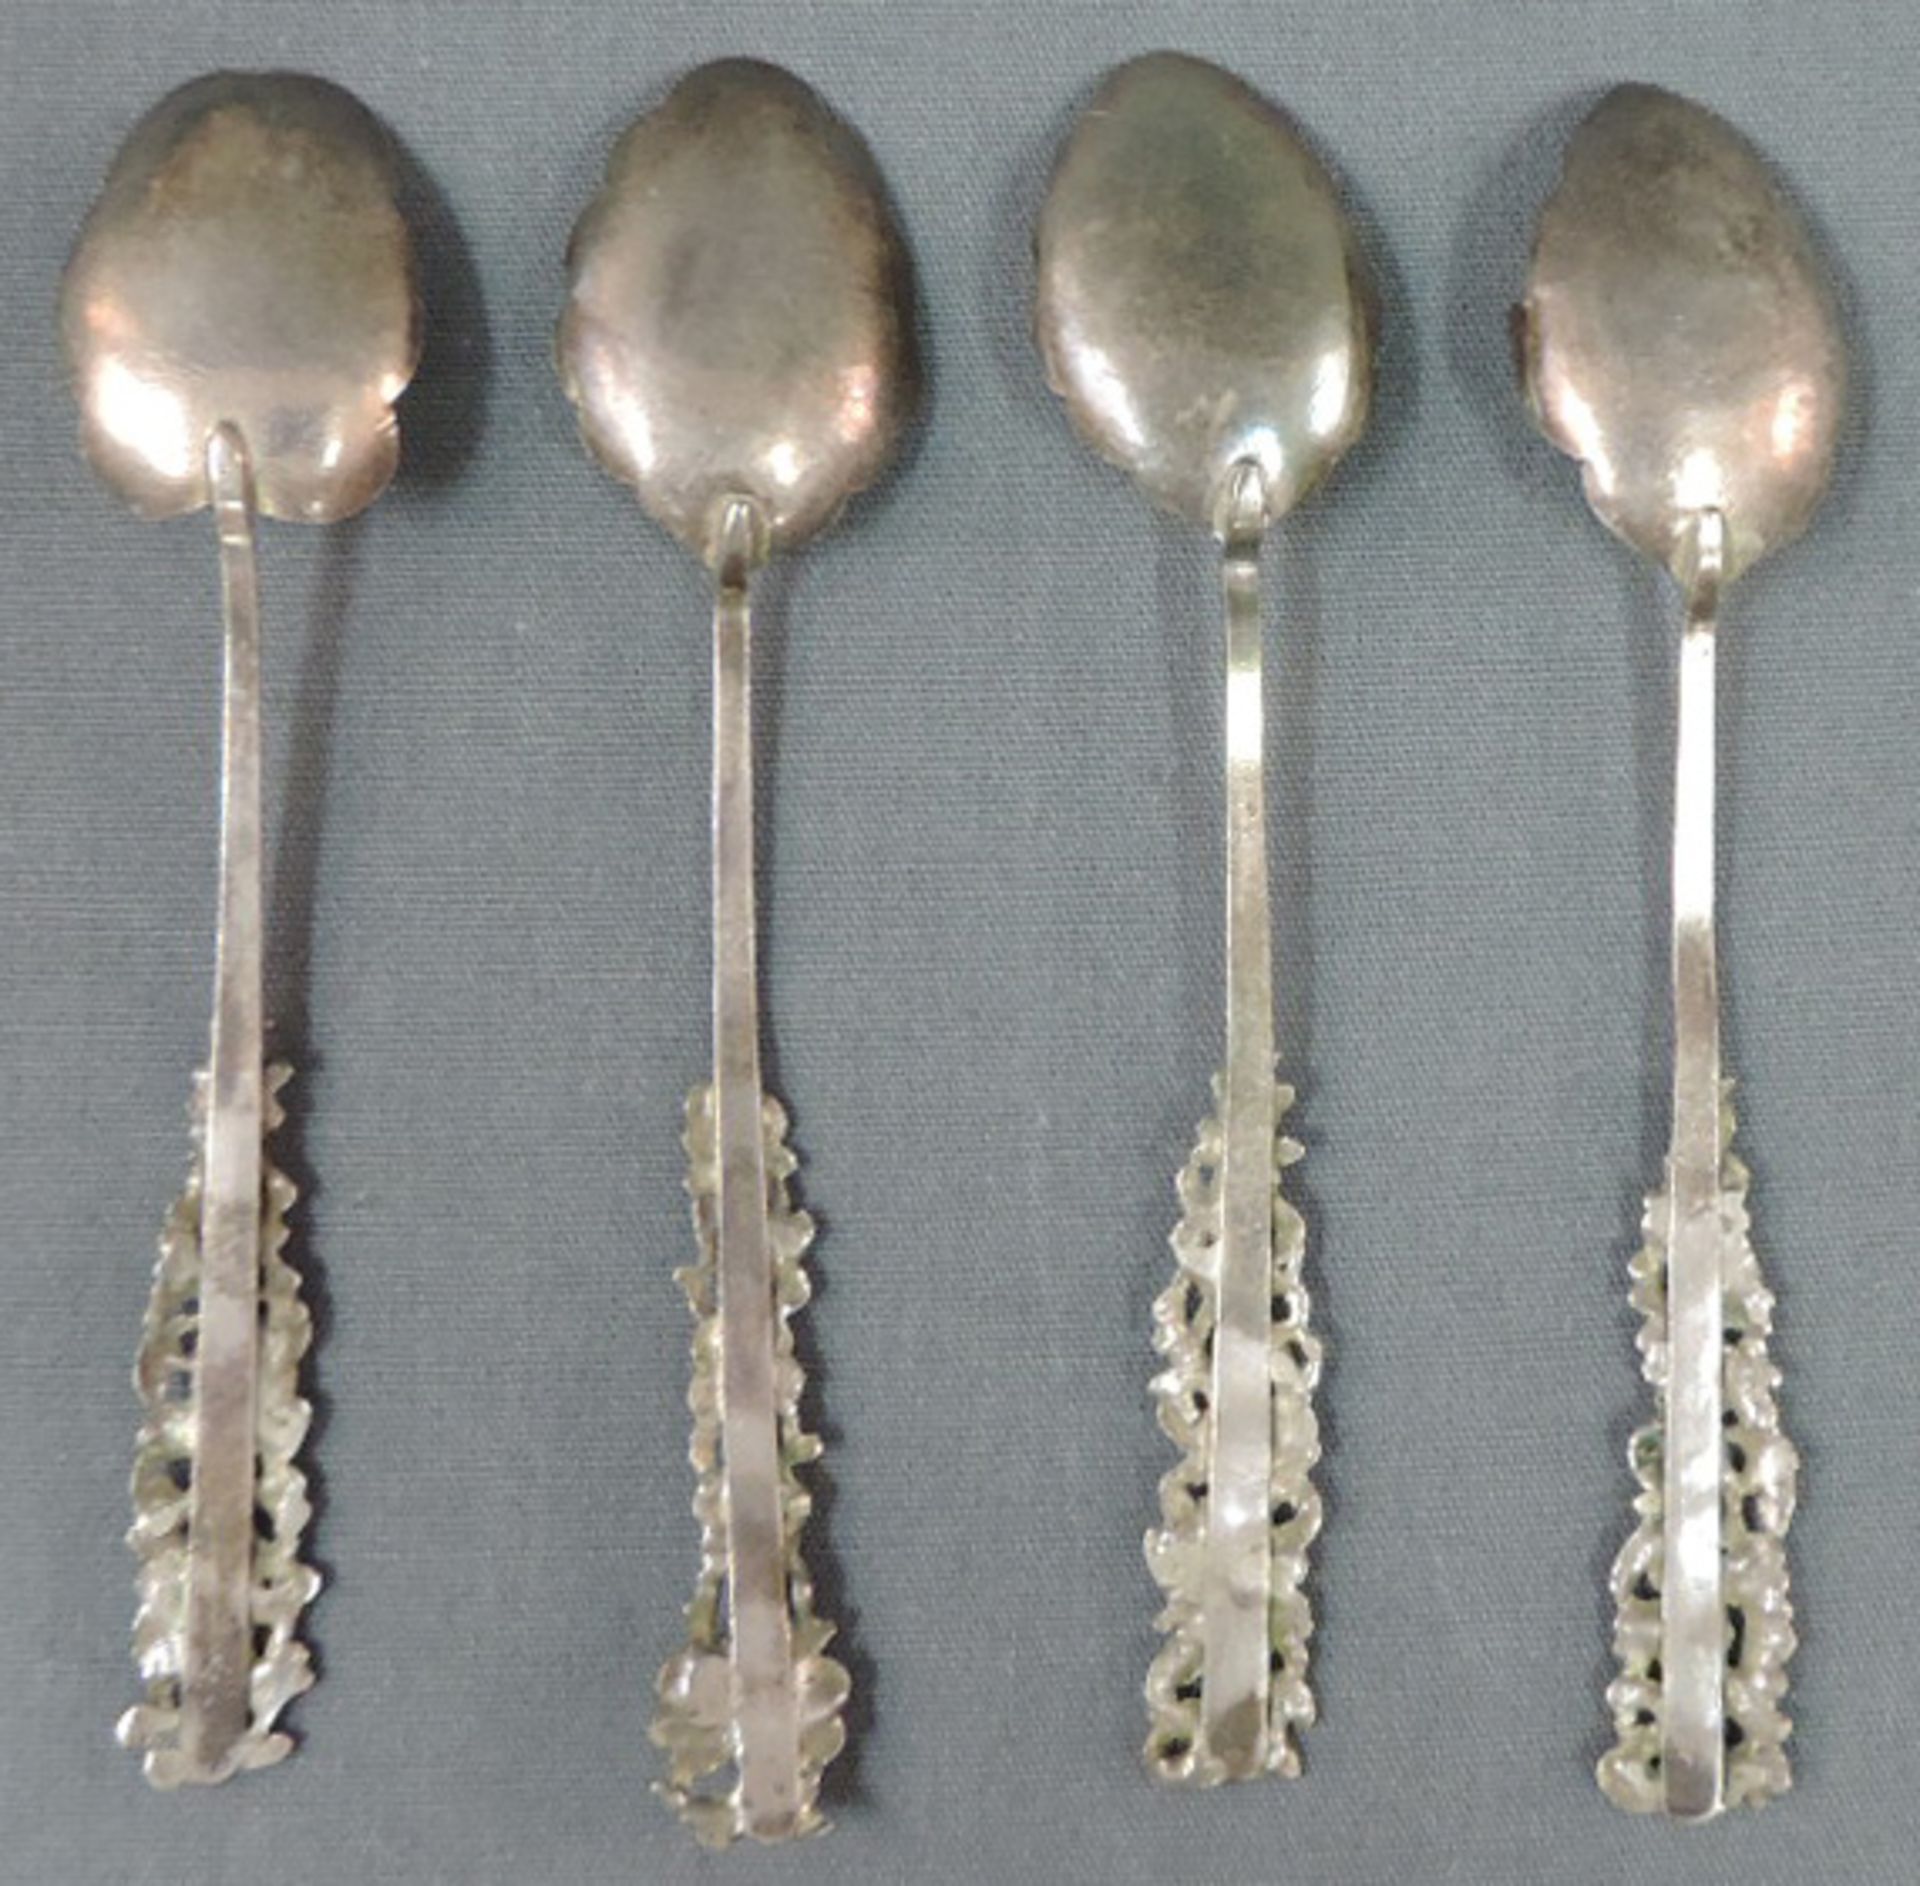 4 Silberlöffel, China, Jugendstil.Je 13 cm lang.4 silver spoons. China. Art Nouveau.13 cm long. - Bild 2 aus 3